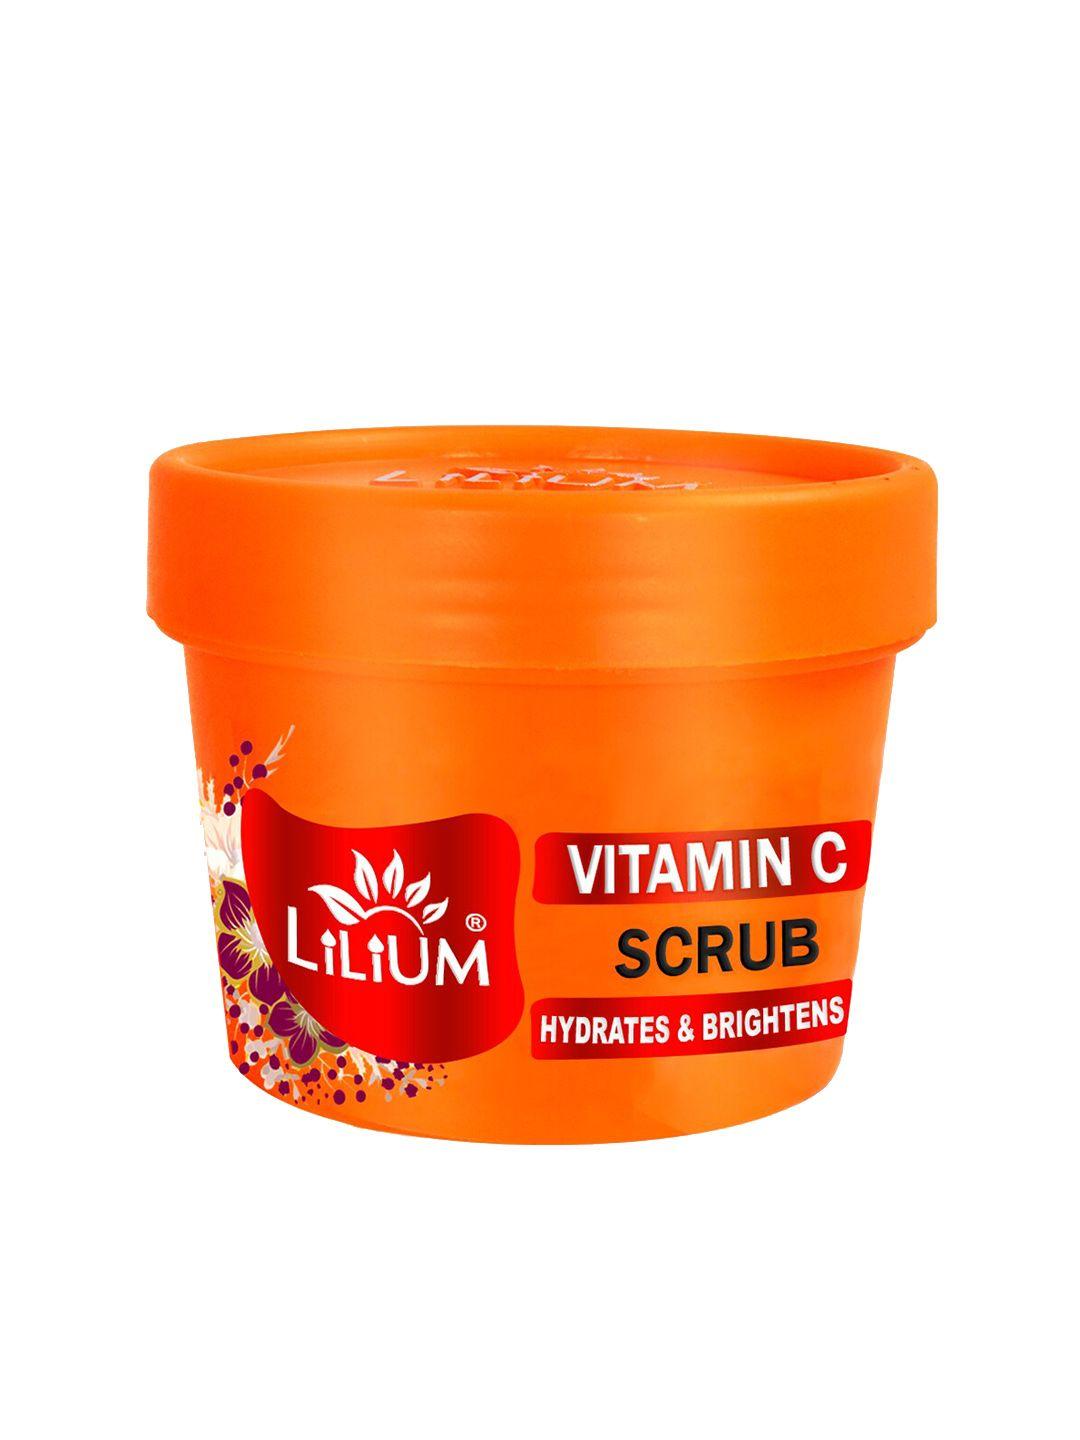 lilium vitamin c scrub for for hydrates & brightens skin - 100g